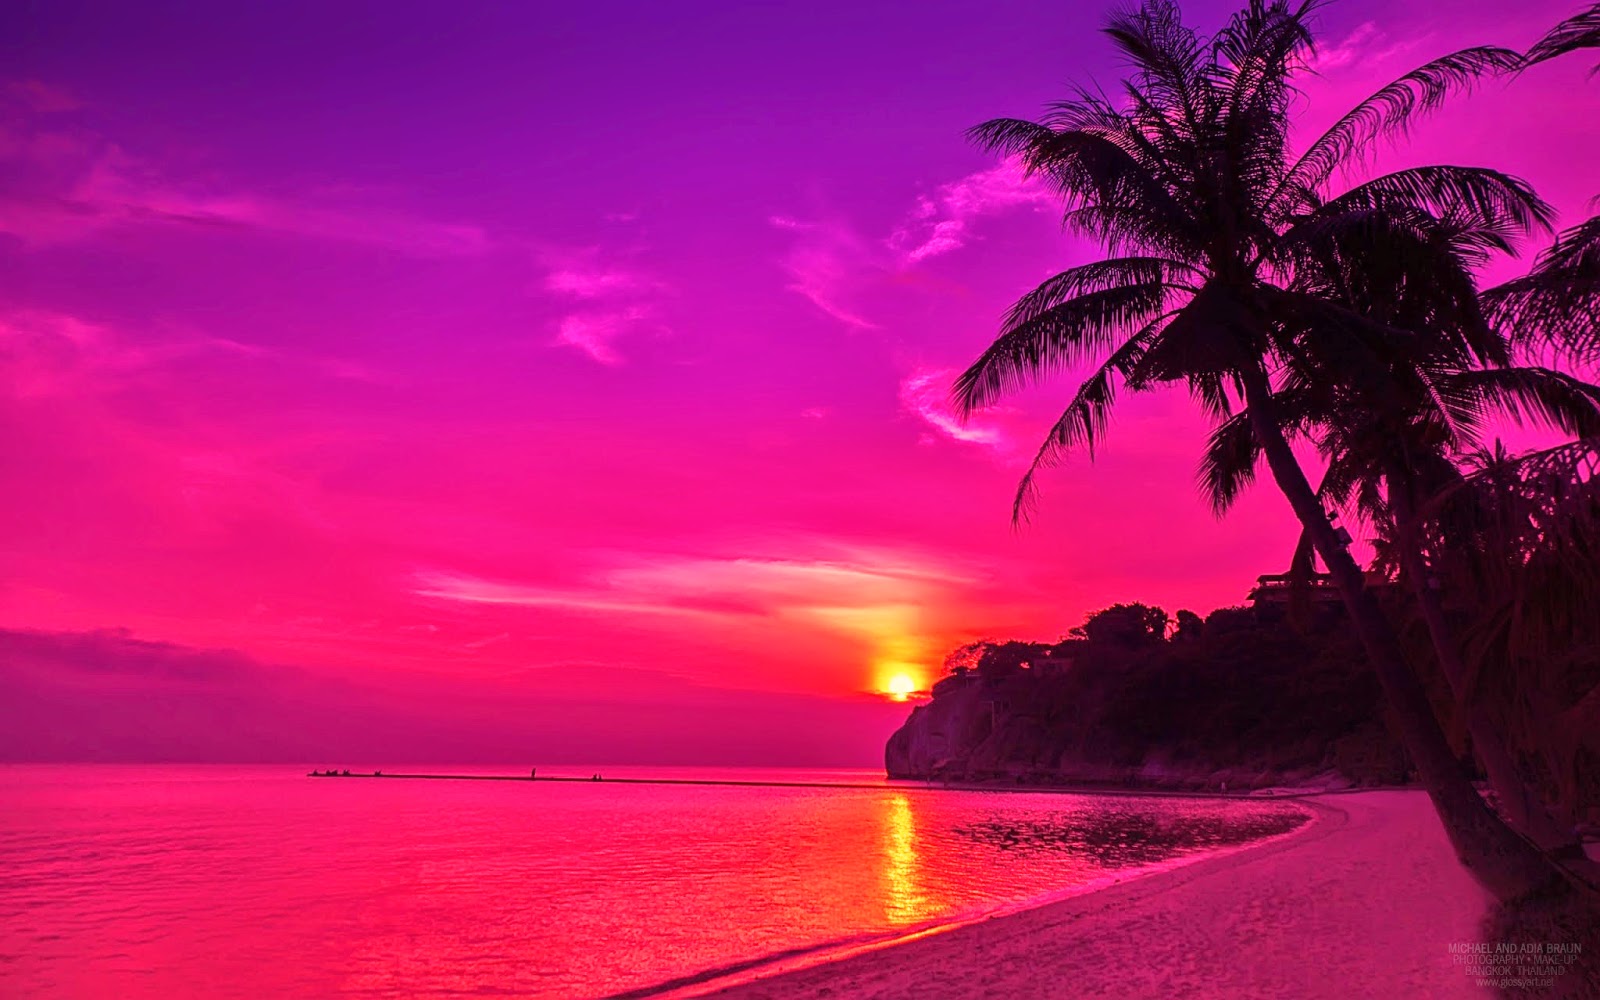 Pink Beach Sunset Wallpaper - WallpaperSafari